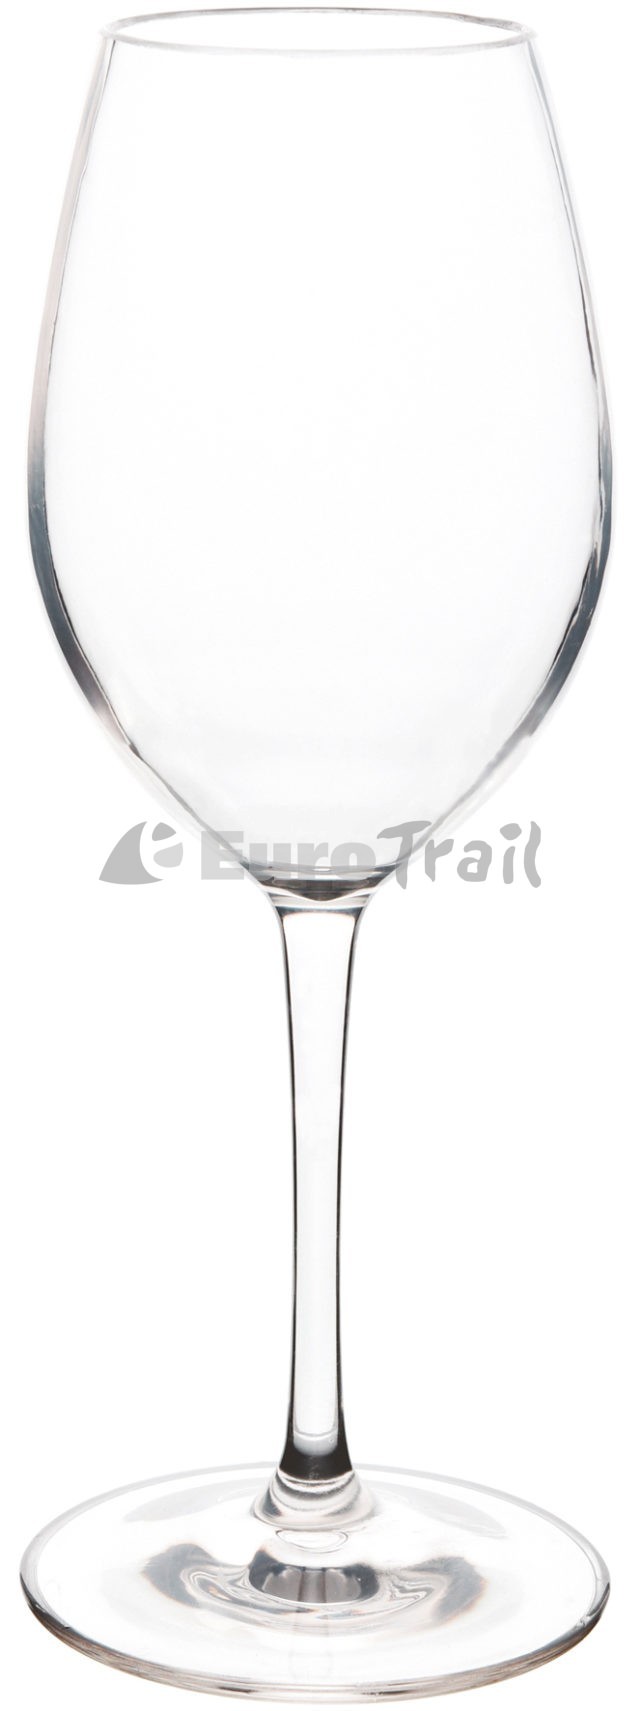 Eurotrail wine glass